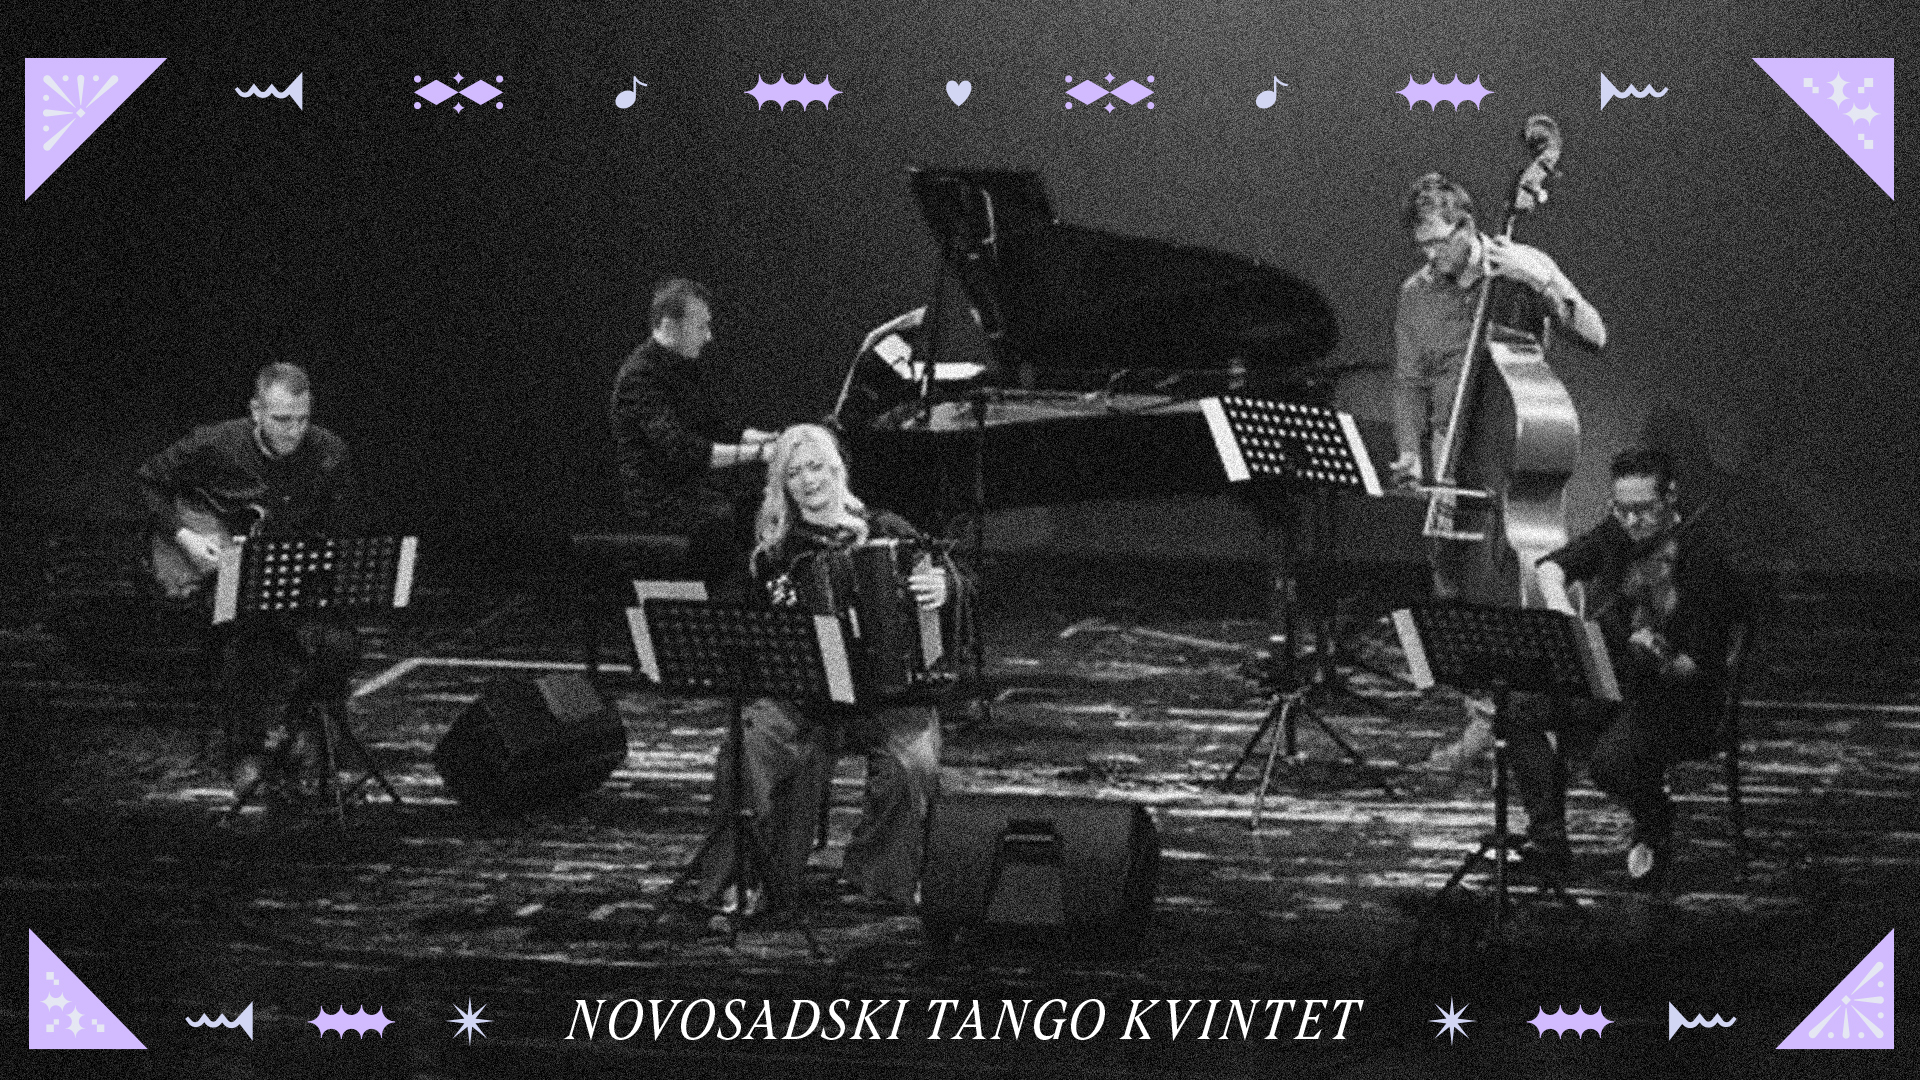 Novosadski tango kvintet